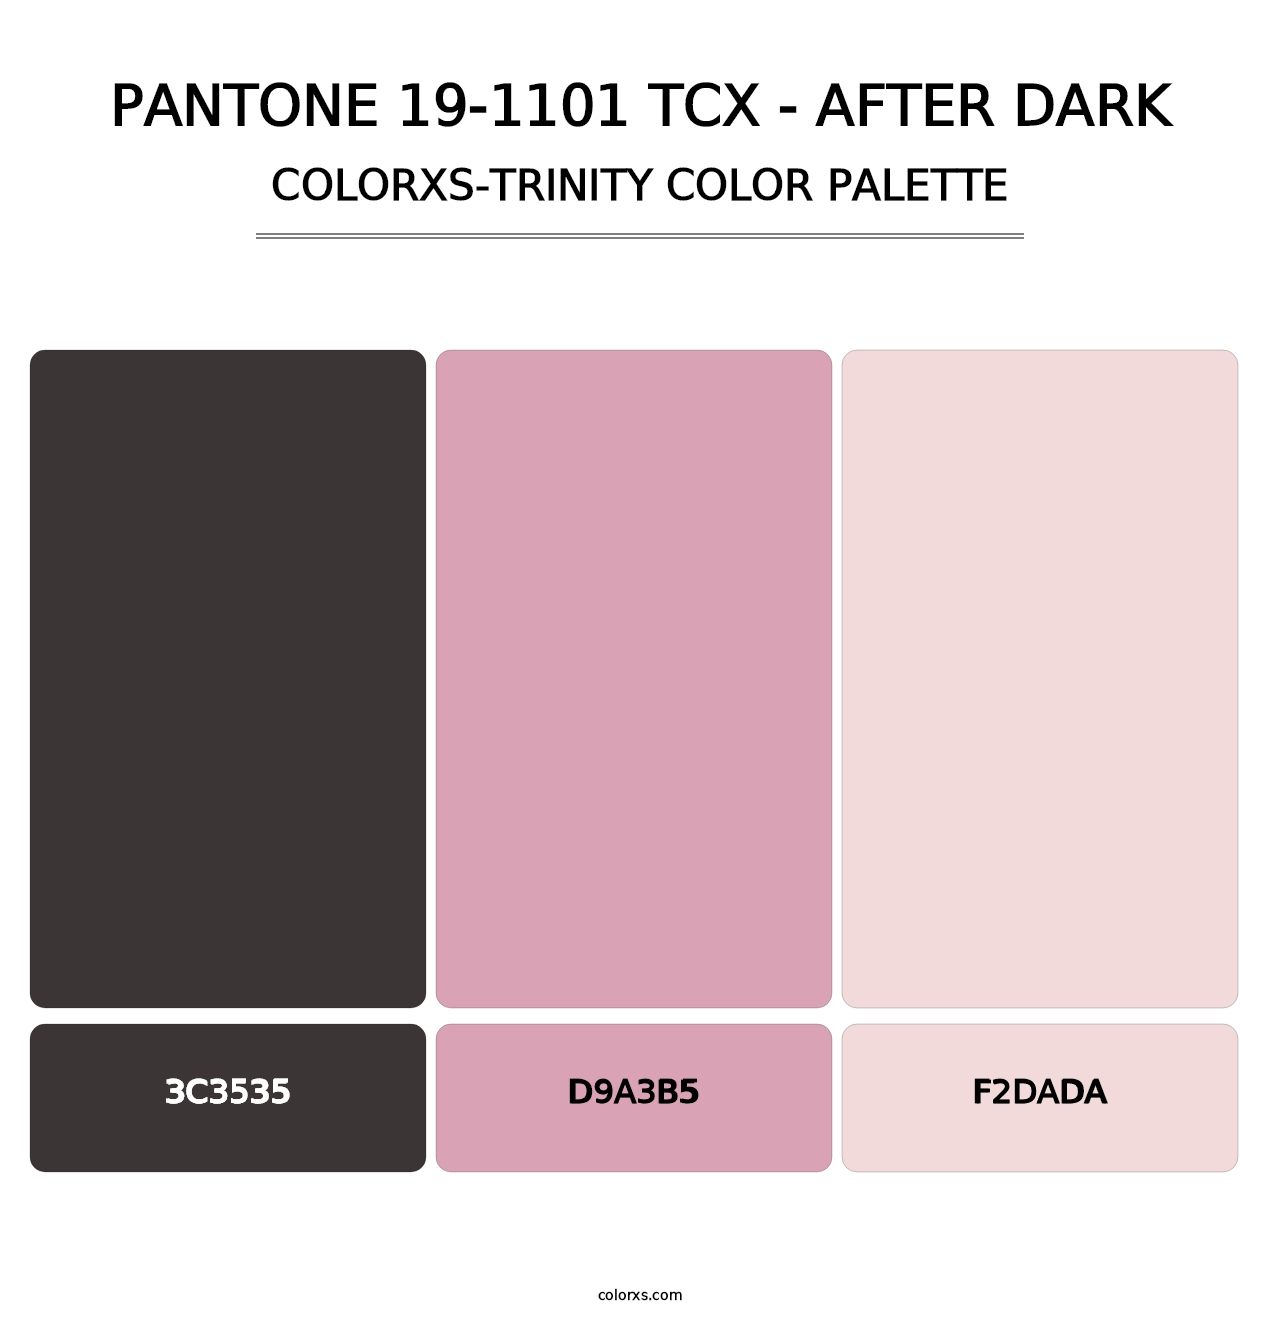 PANTONE 19-1101 TCX - After Dark - Colorxs Trinity Palette